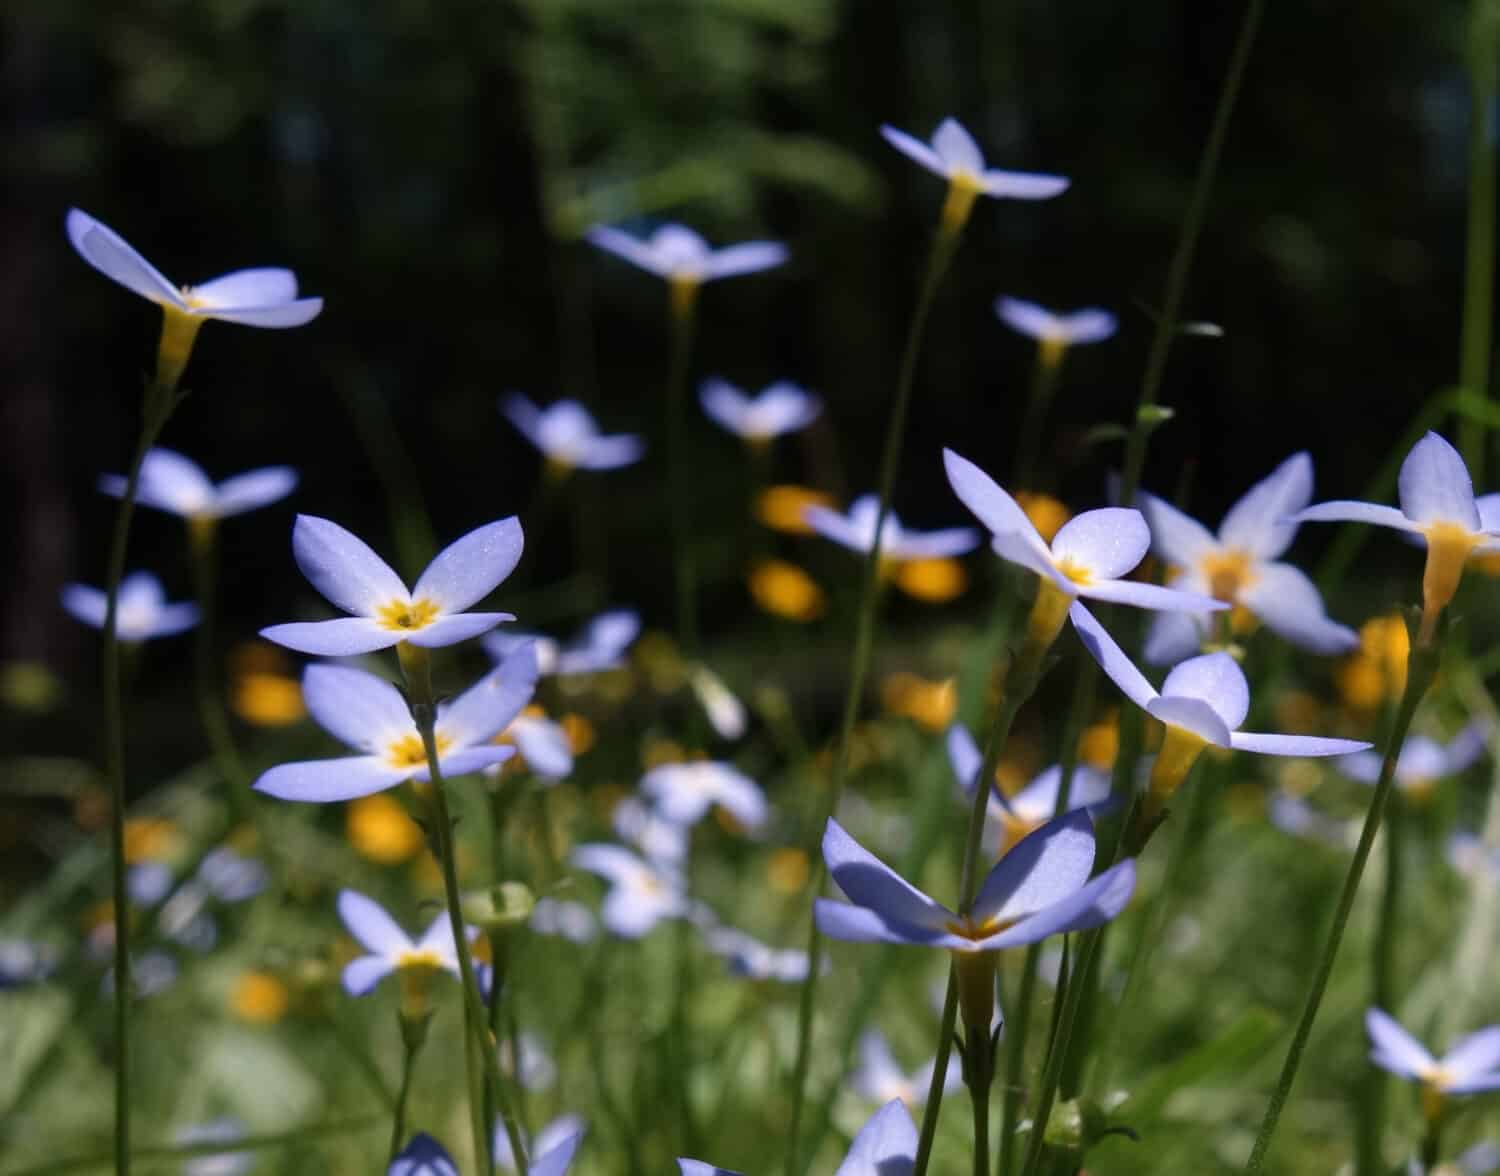 Houstonia caerulea (Quaker ladies, Azure bluet) Wildflowers